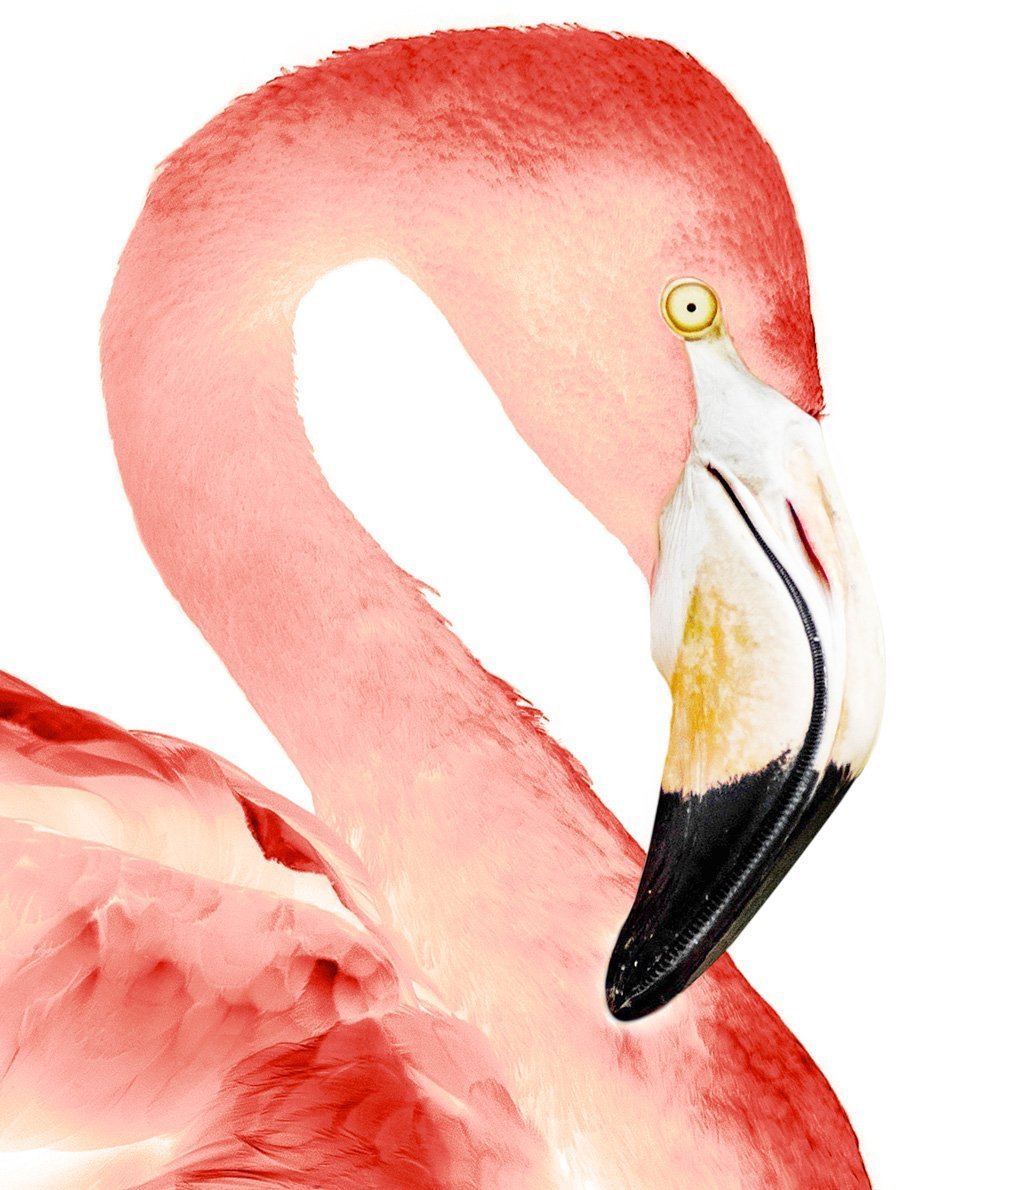 Illuminated Flamingo Print - The Crown Prints